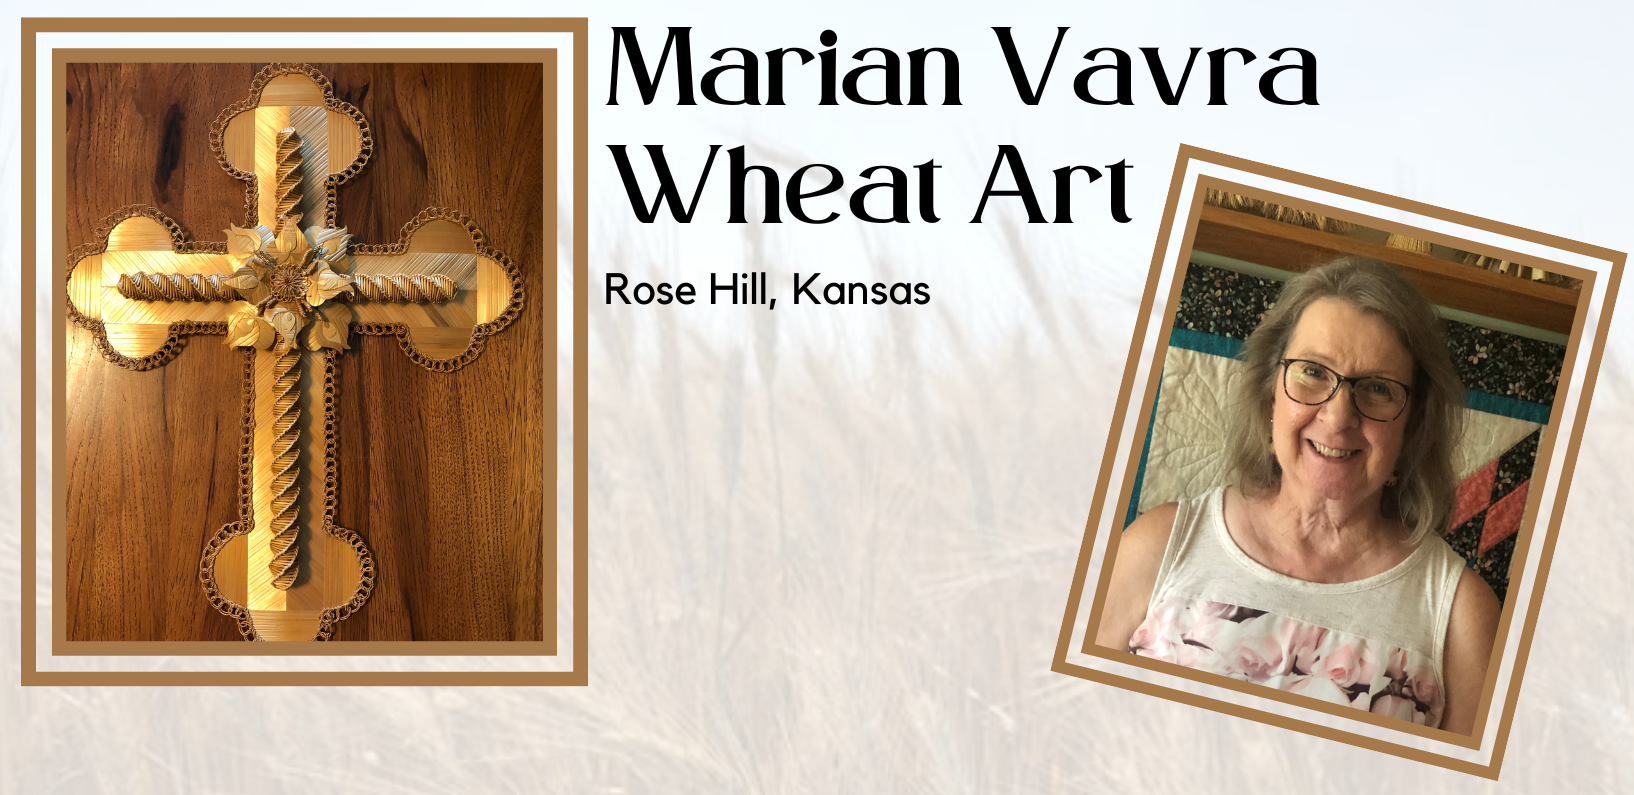 Marian Vavra Wheat Art